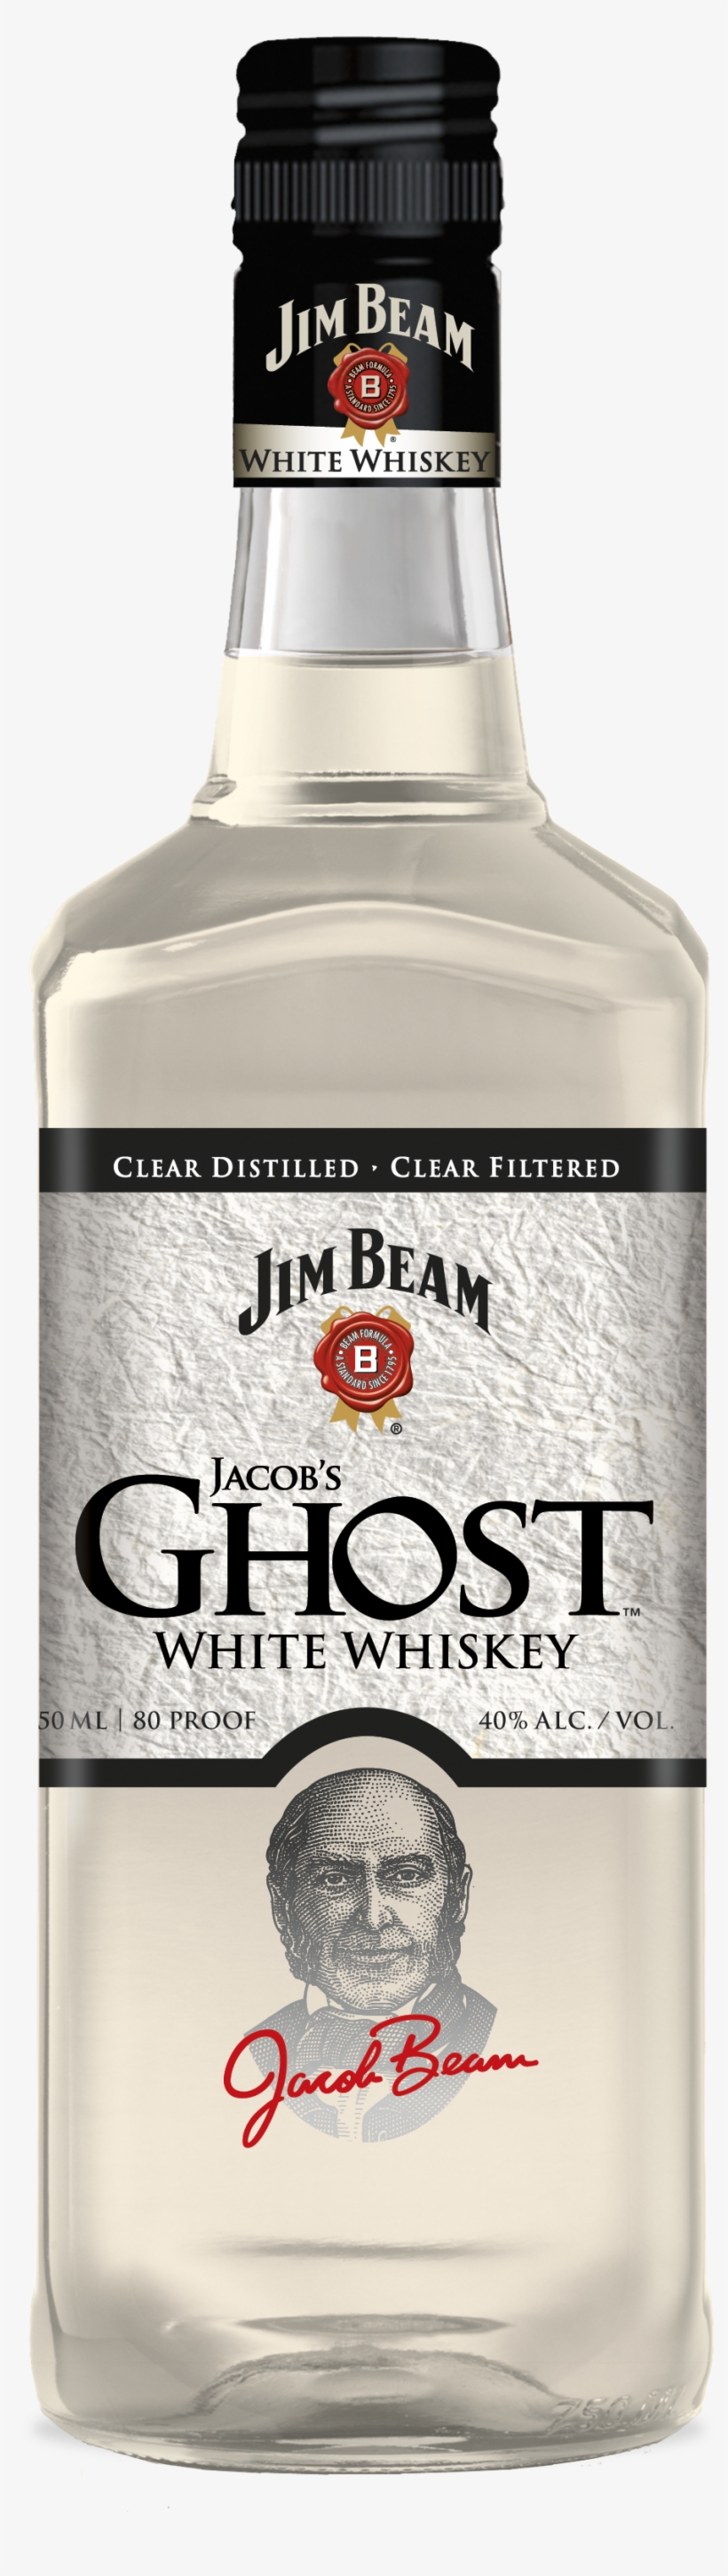 Jacob's Ghost - Jim Beam Jacob's Ghost, transparent png #5846700